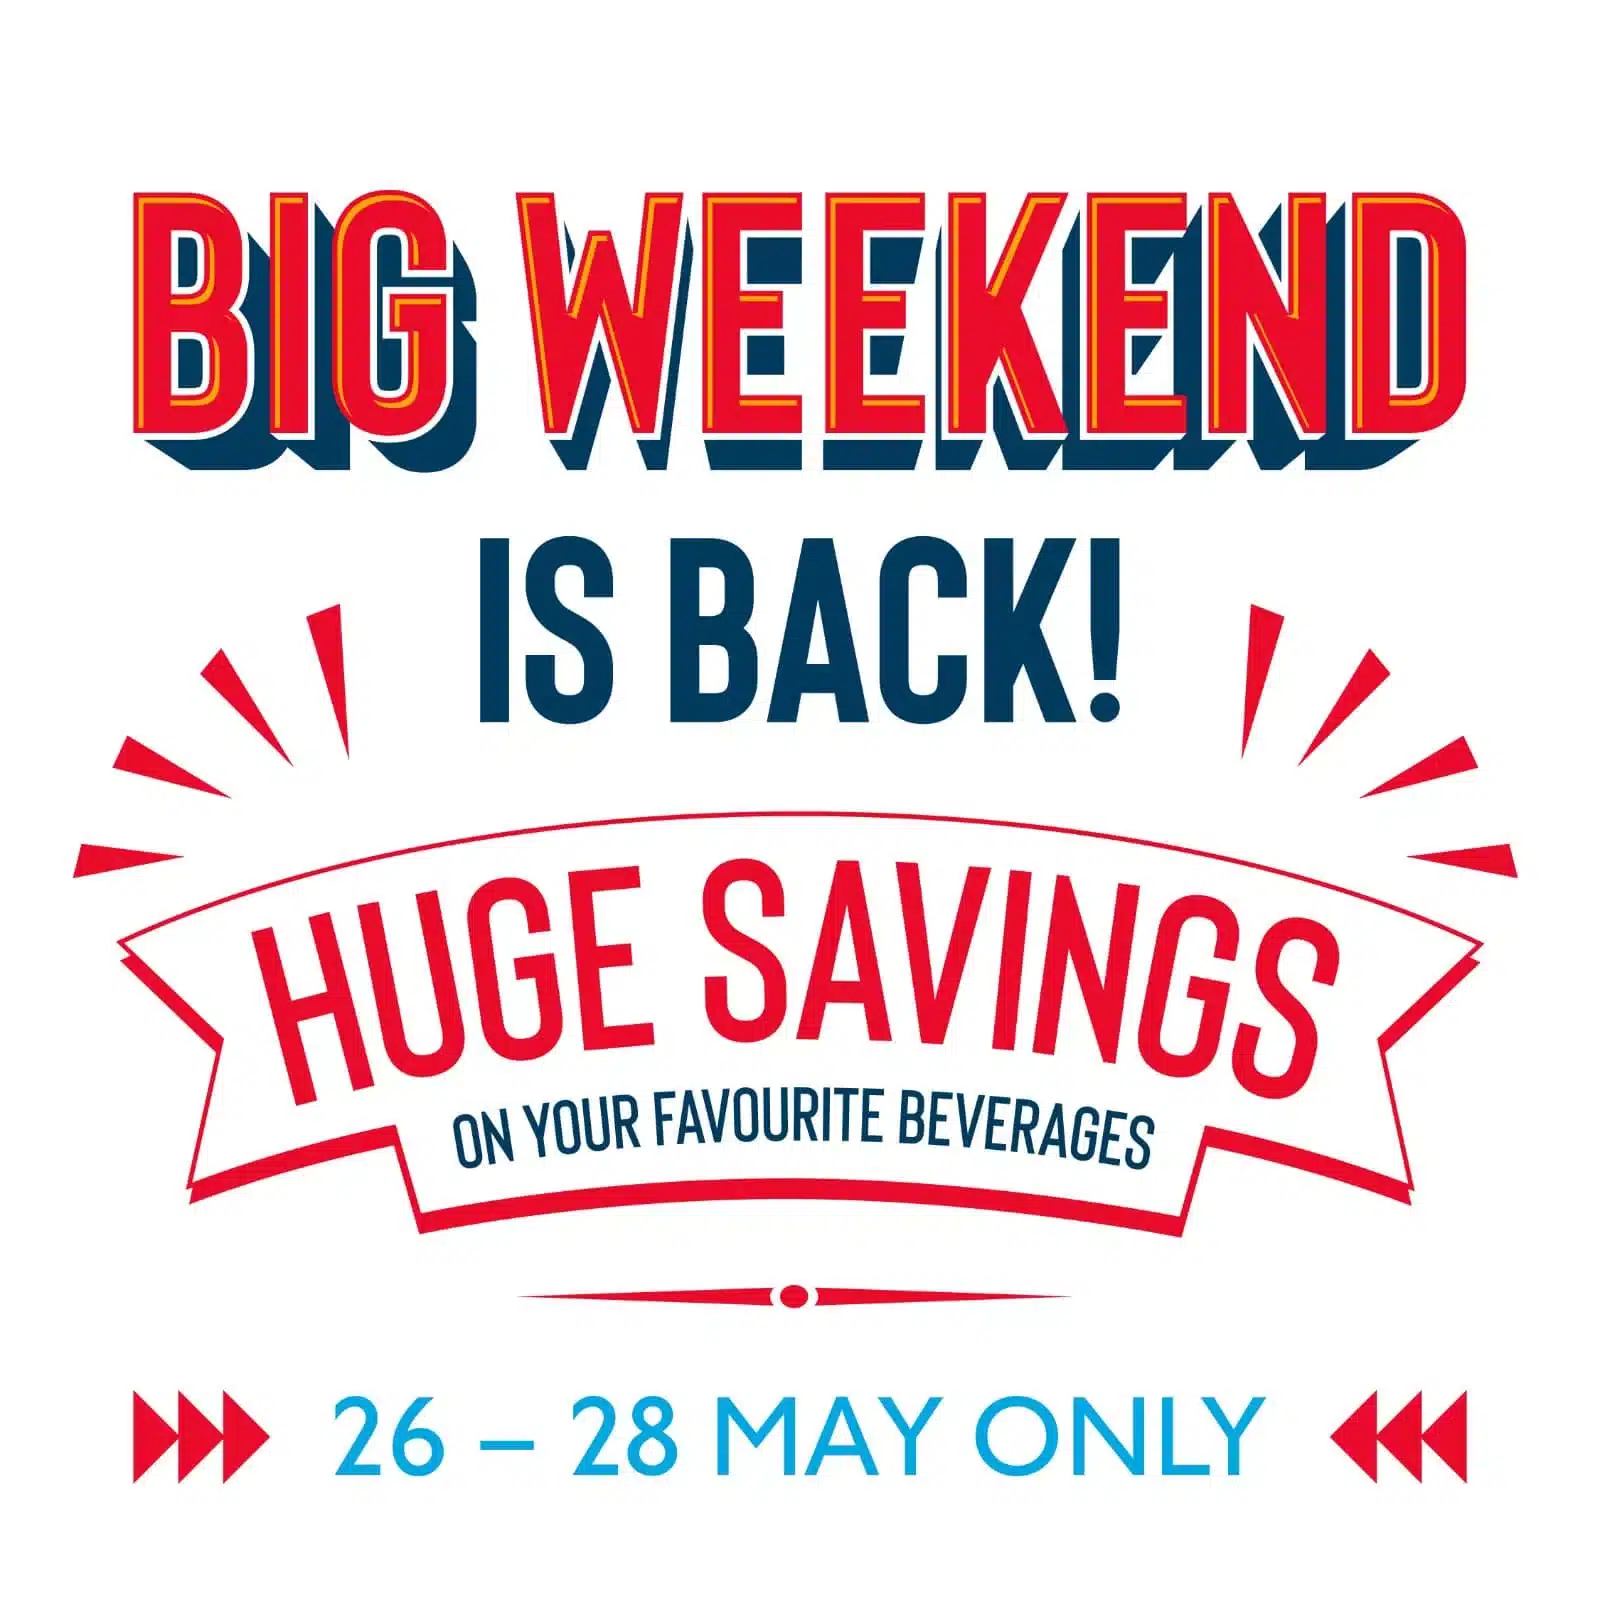 The Original Barracuda Big Weekend offers